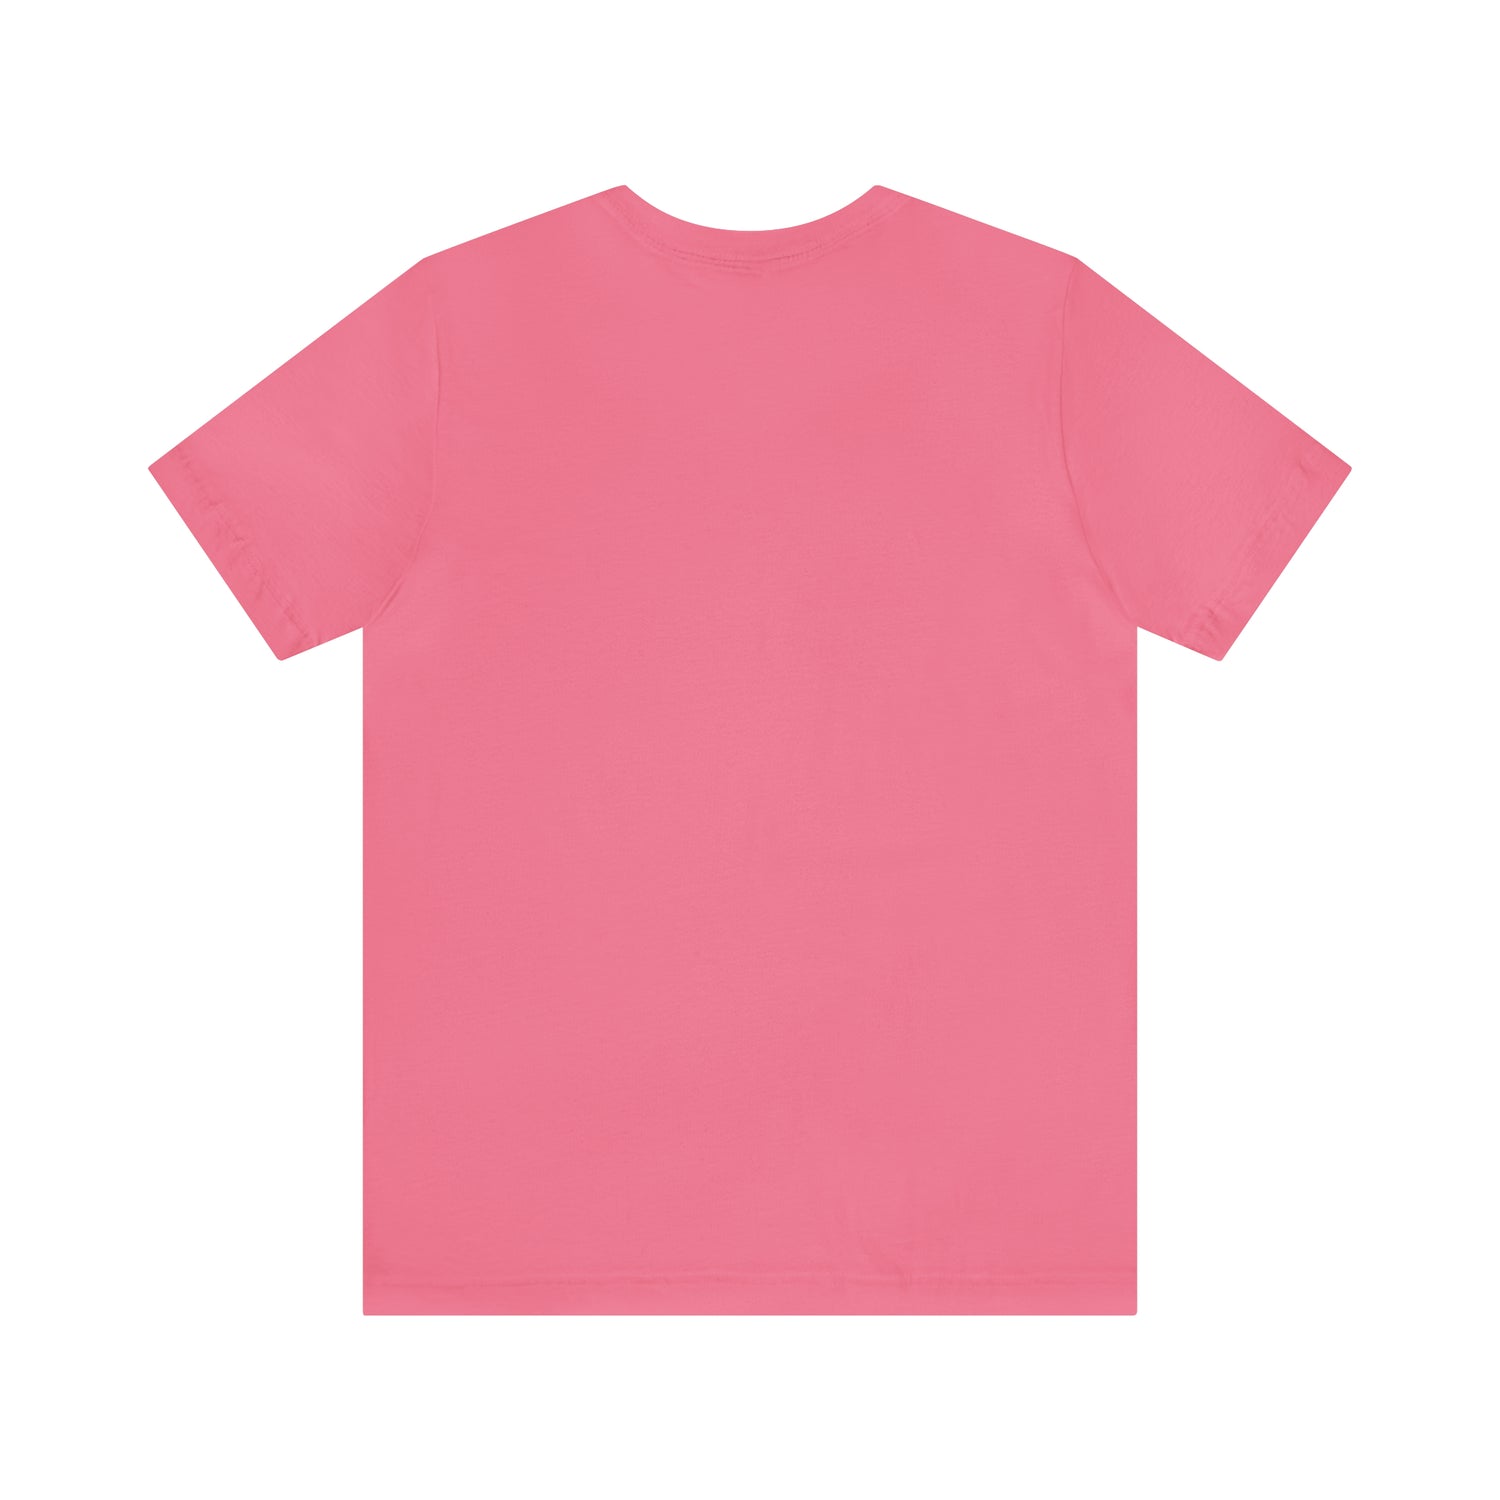 Basketball Hobby Gift Idea | Basketball T-Shirt T-Shirt Petrova Designs